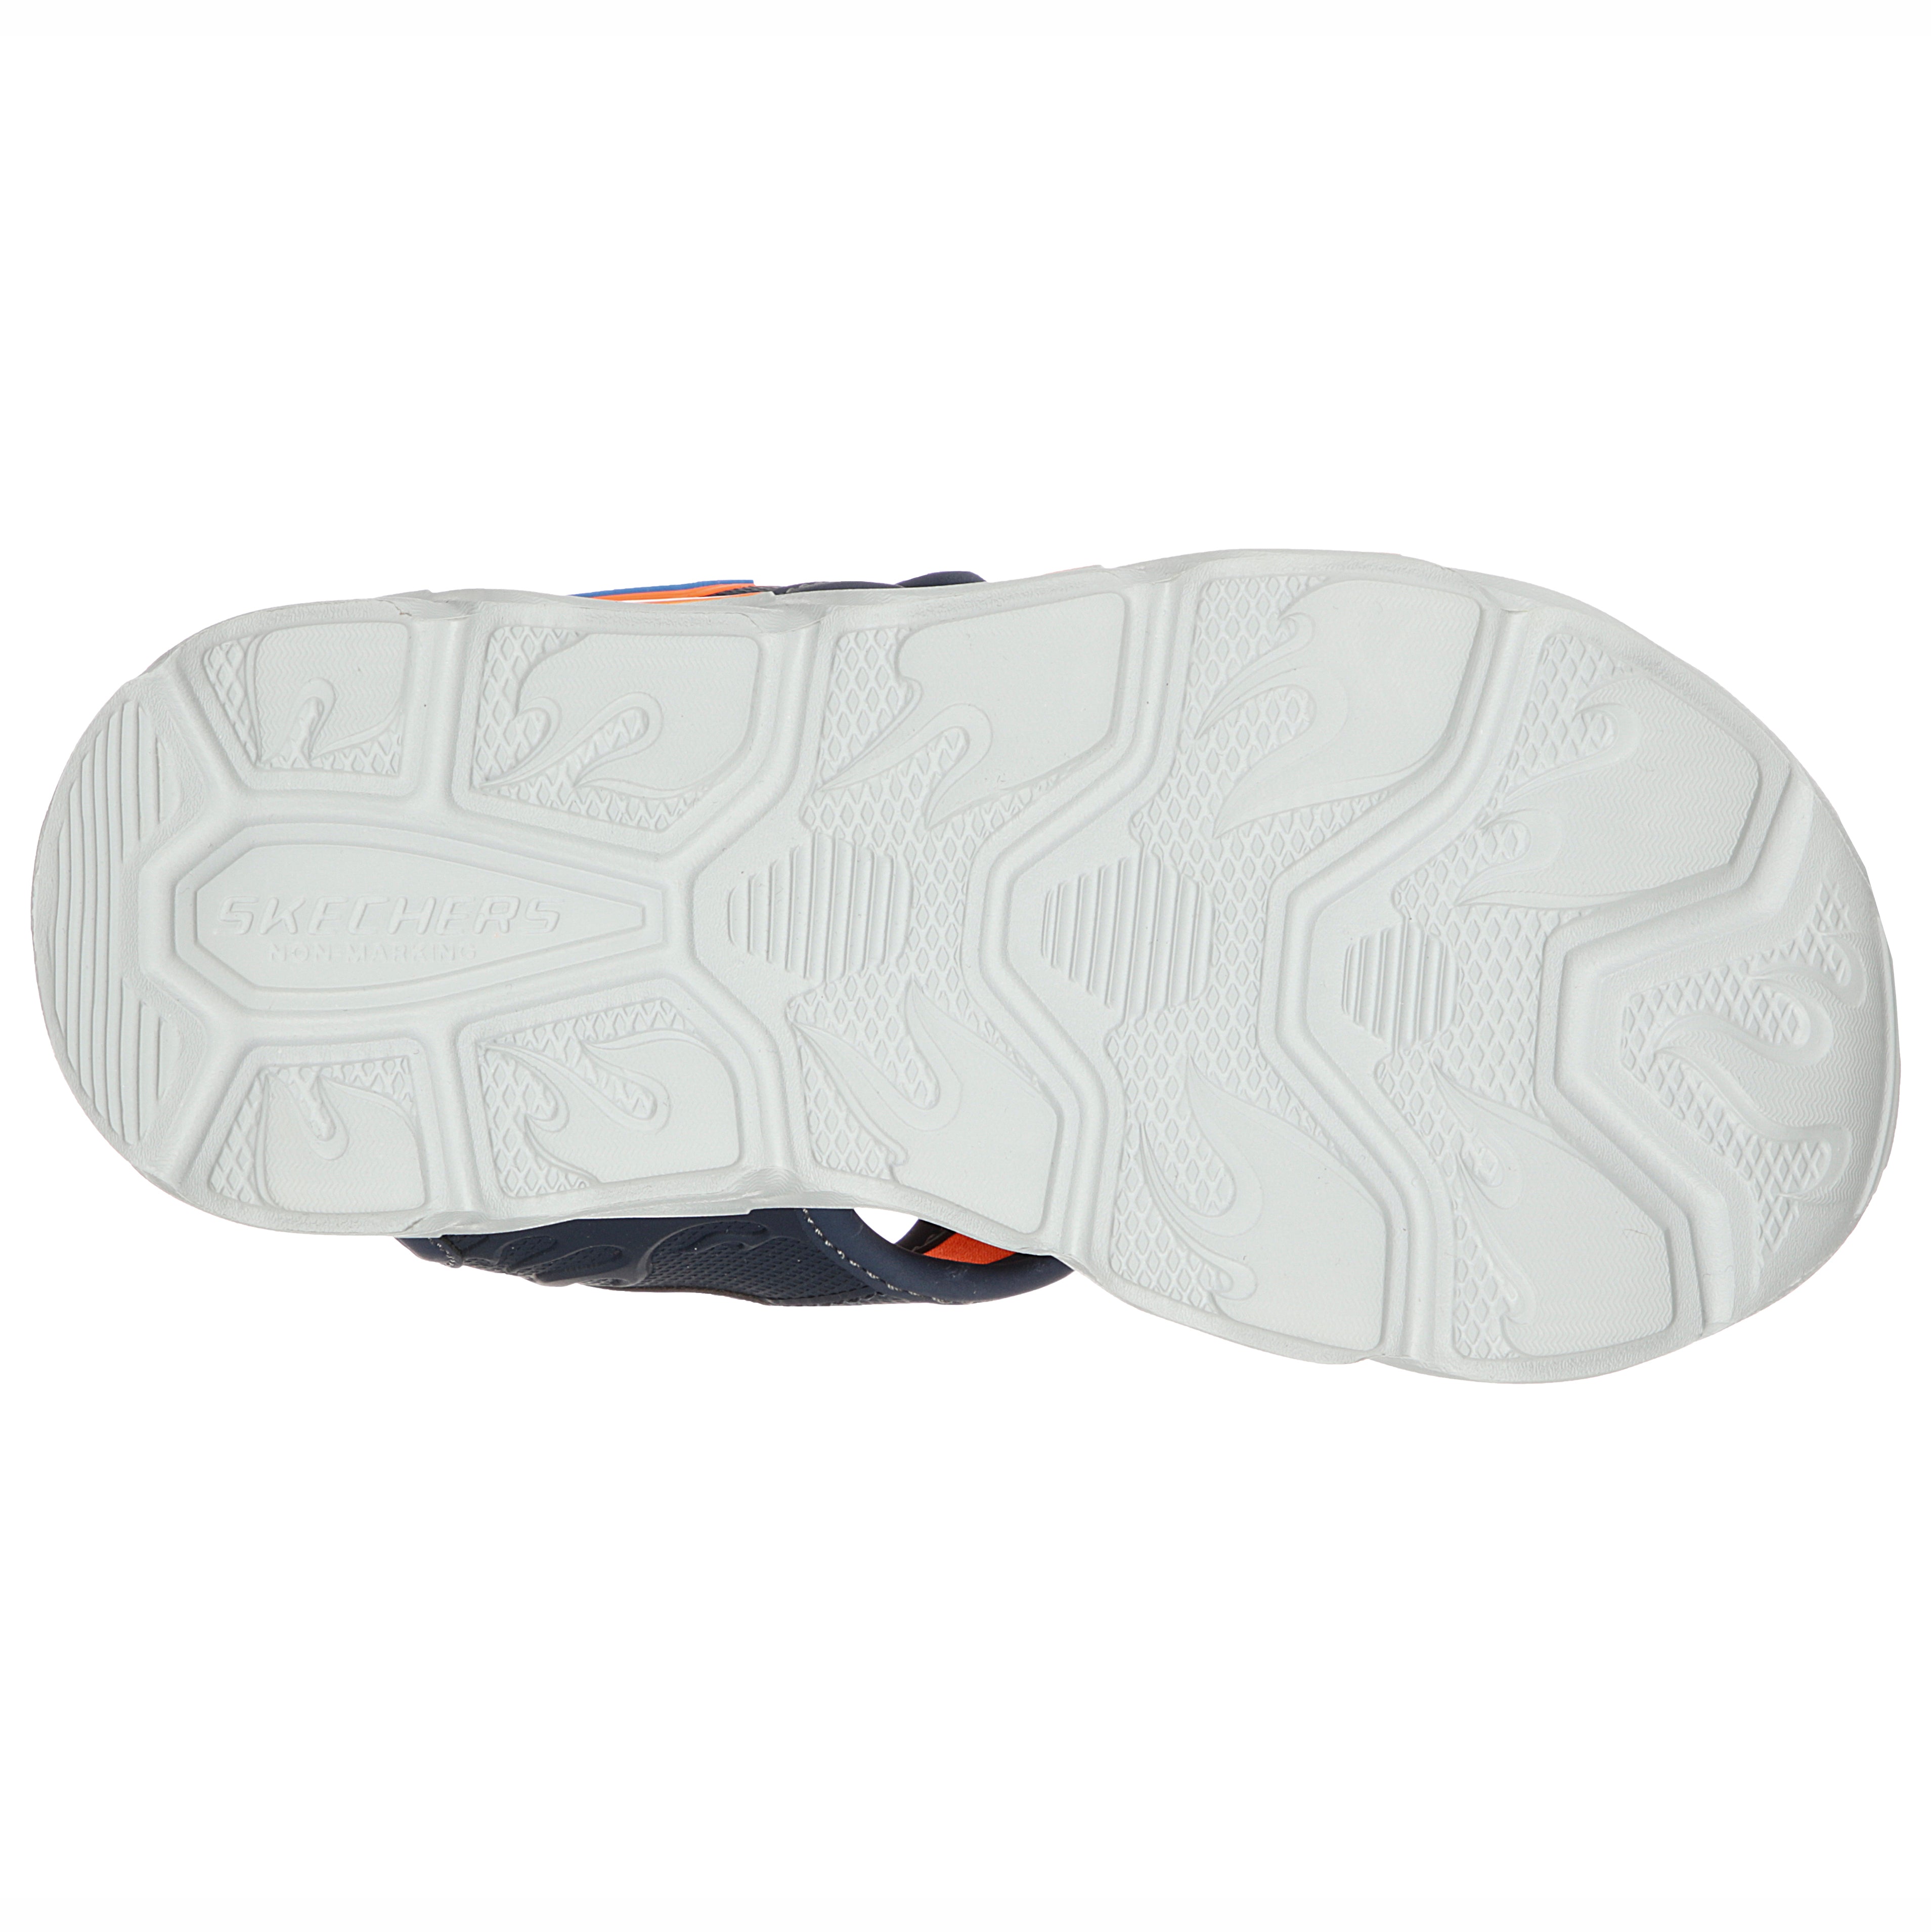 Skechers Sandale copii baieti THERMO SPLASH HEAT FLO 400109L NAVY/ORANGE ICB0056-NVOR